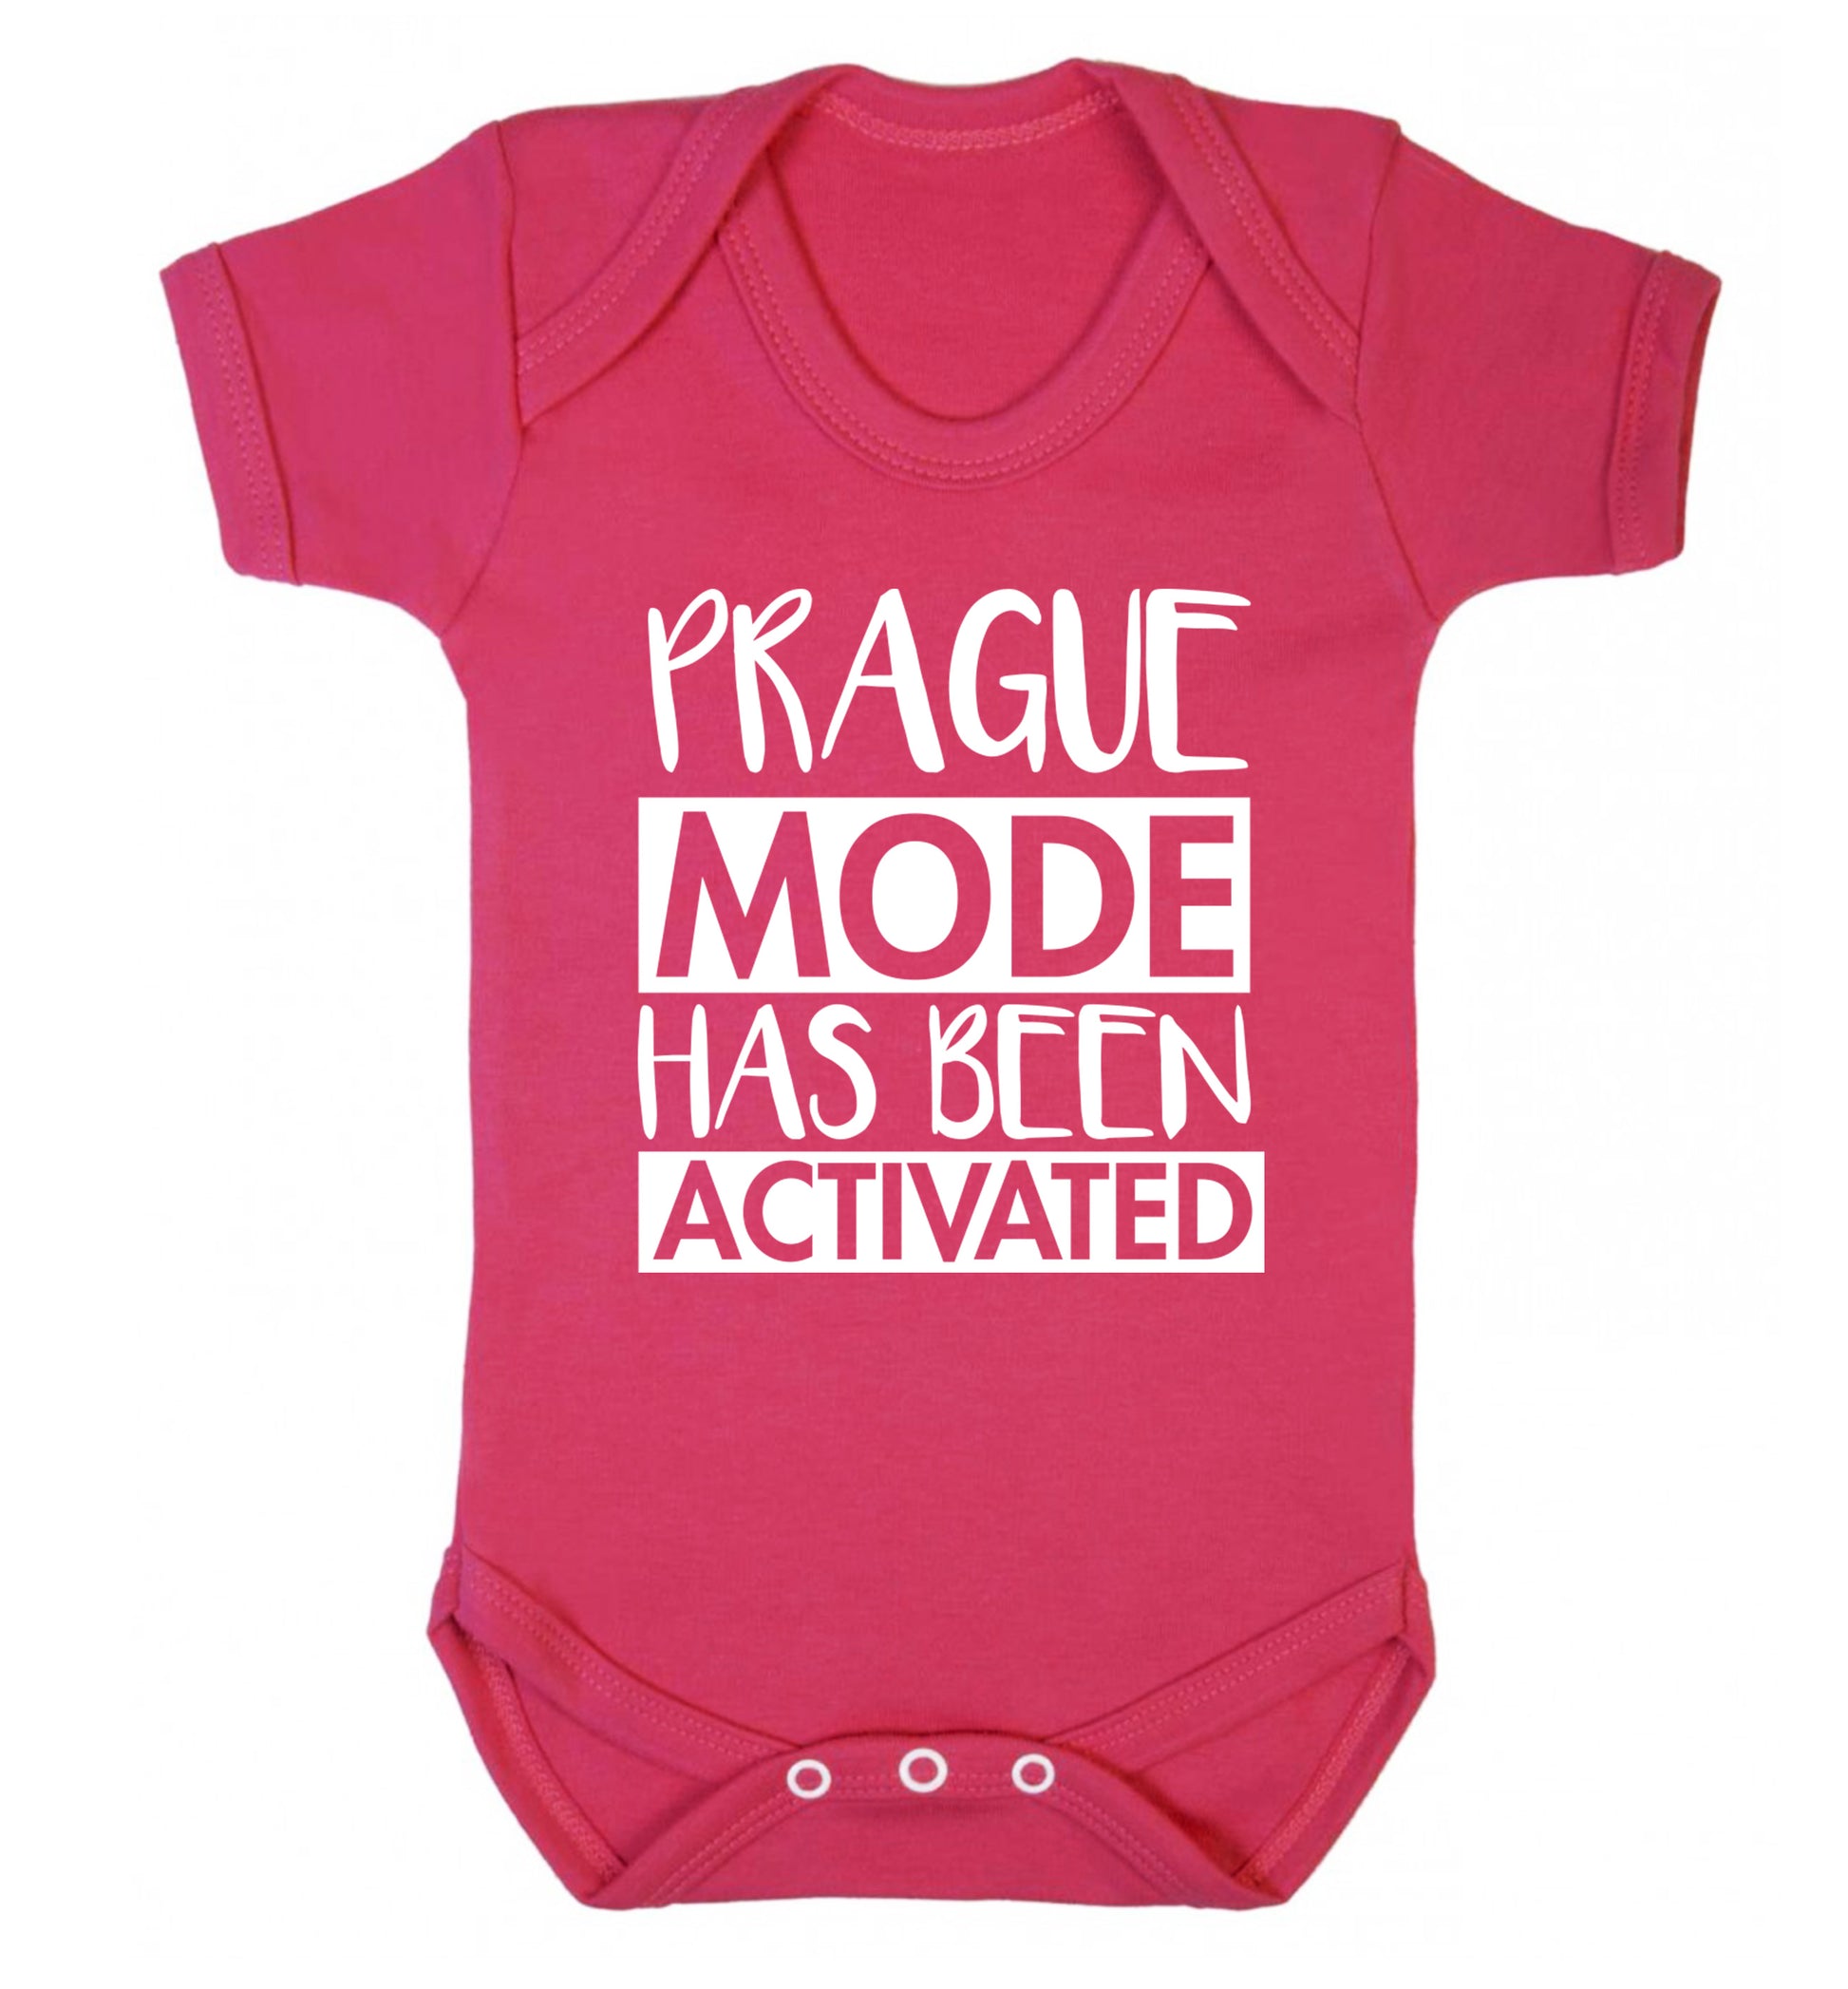 Prague mode has been activated Baby Vest dark pink 18-24 months